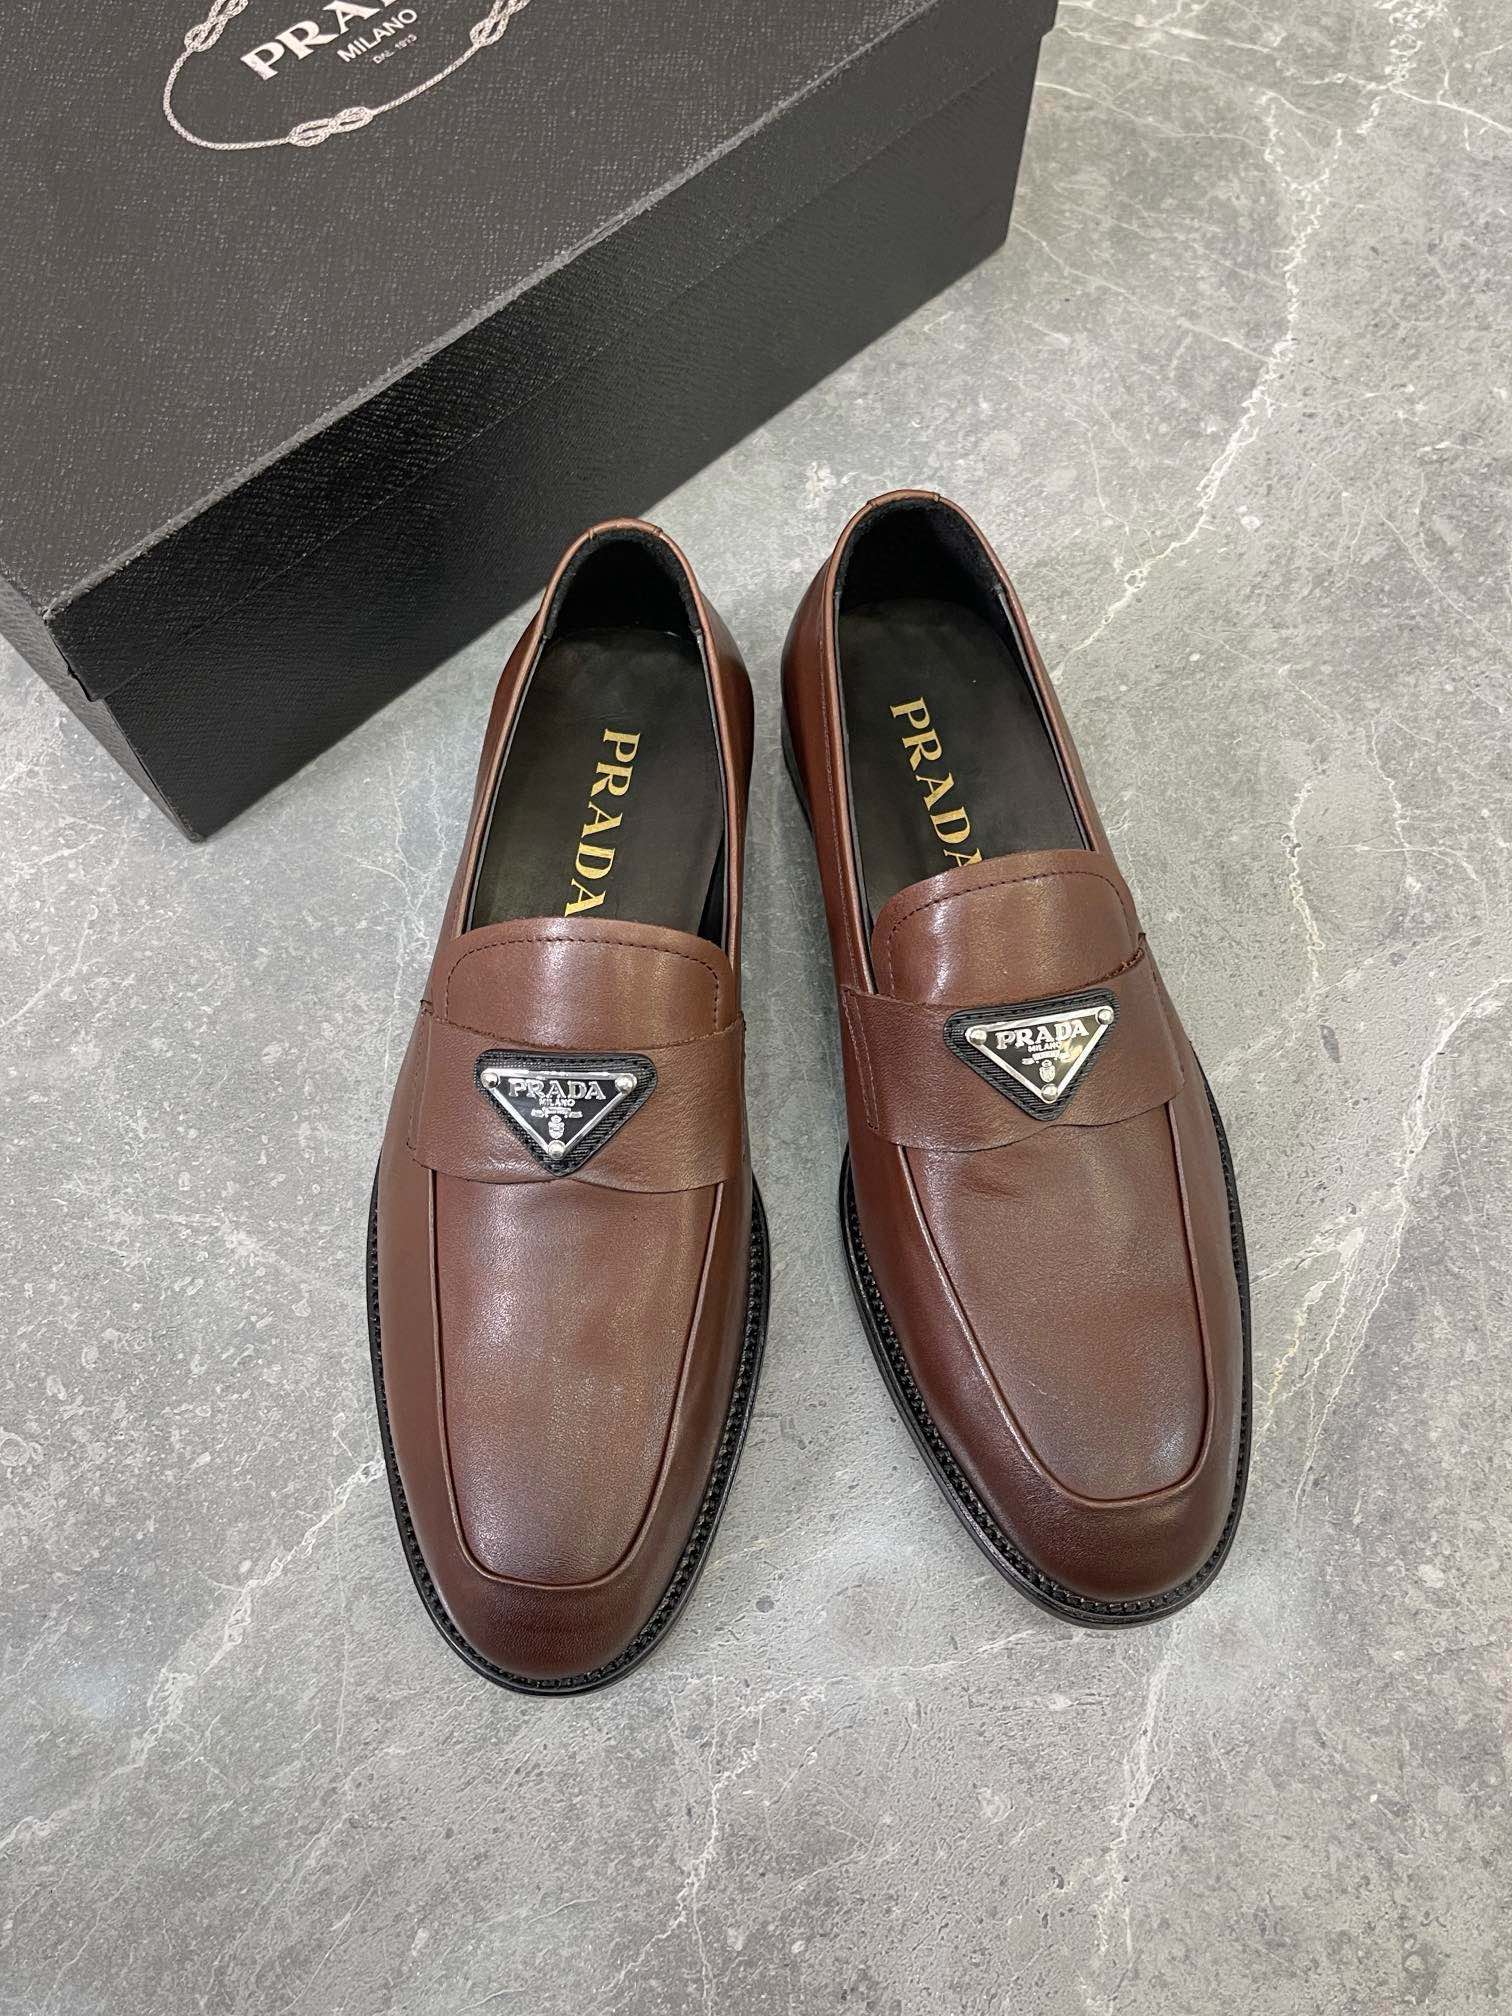 Replica Online Prada Shoes Loafers Men Calfskin Cowhide Genuine Leather Rubber